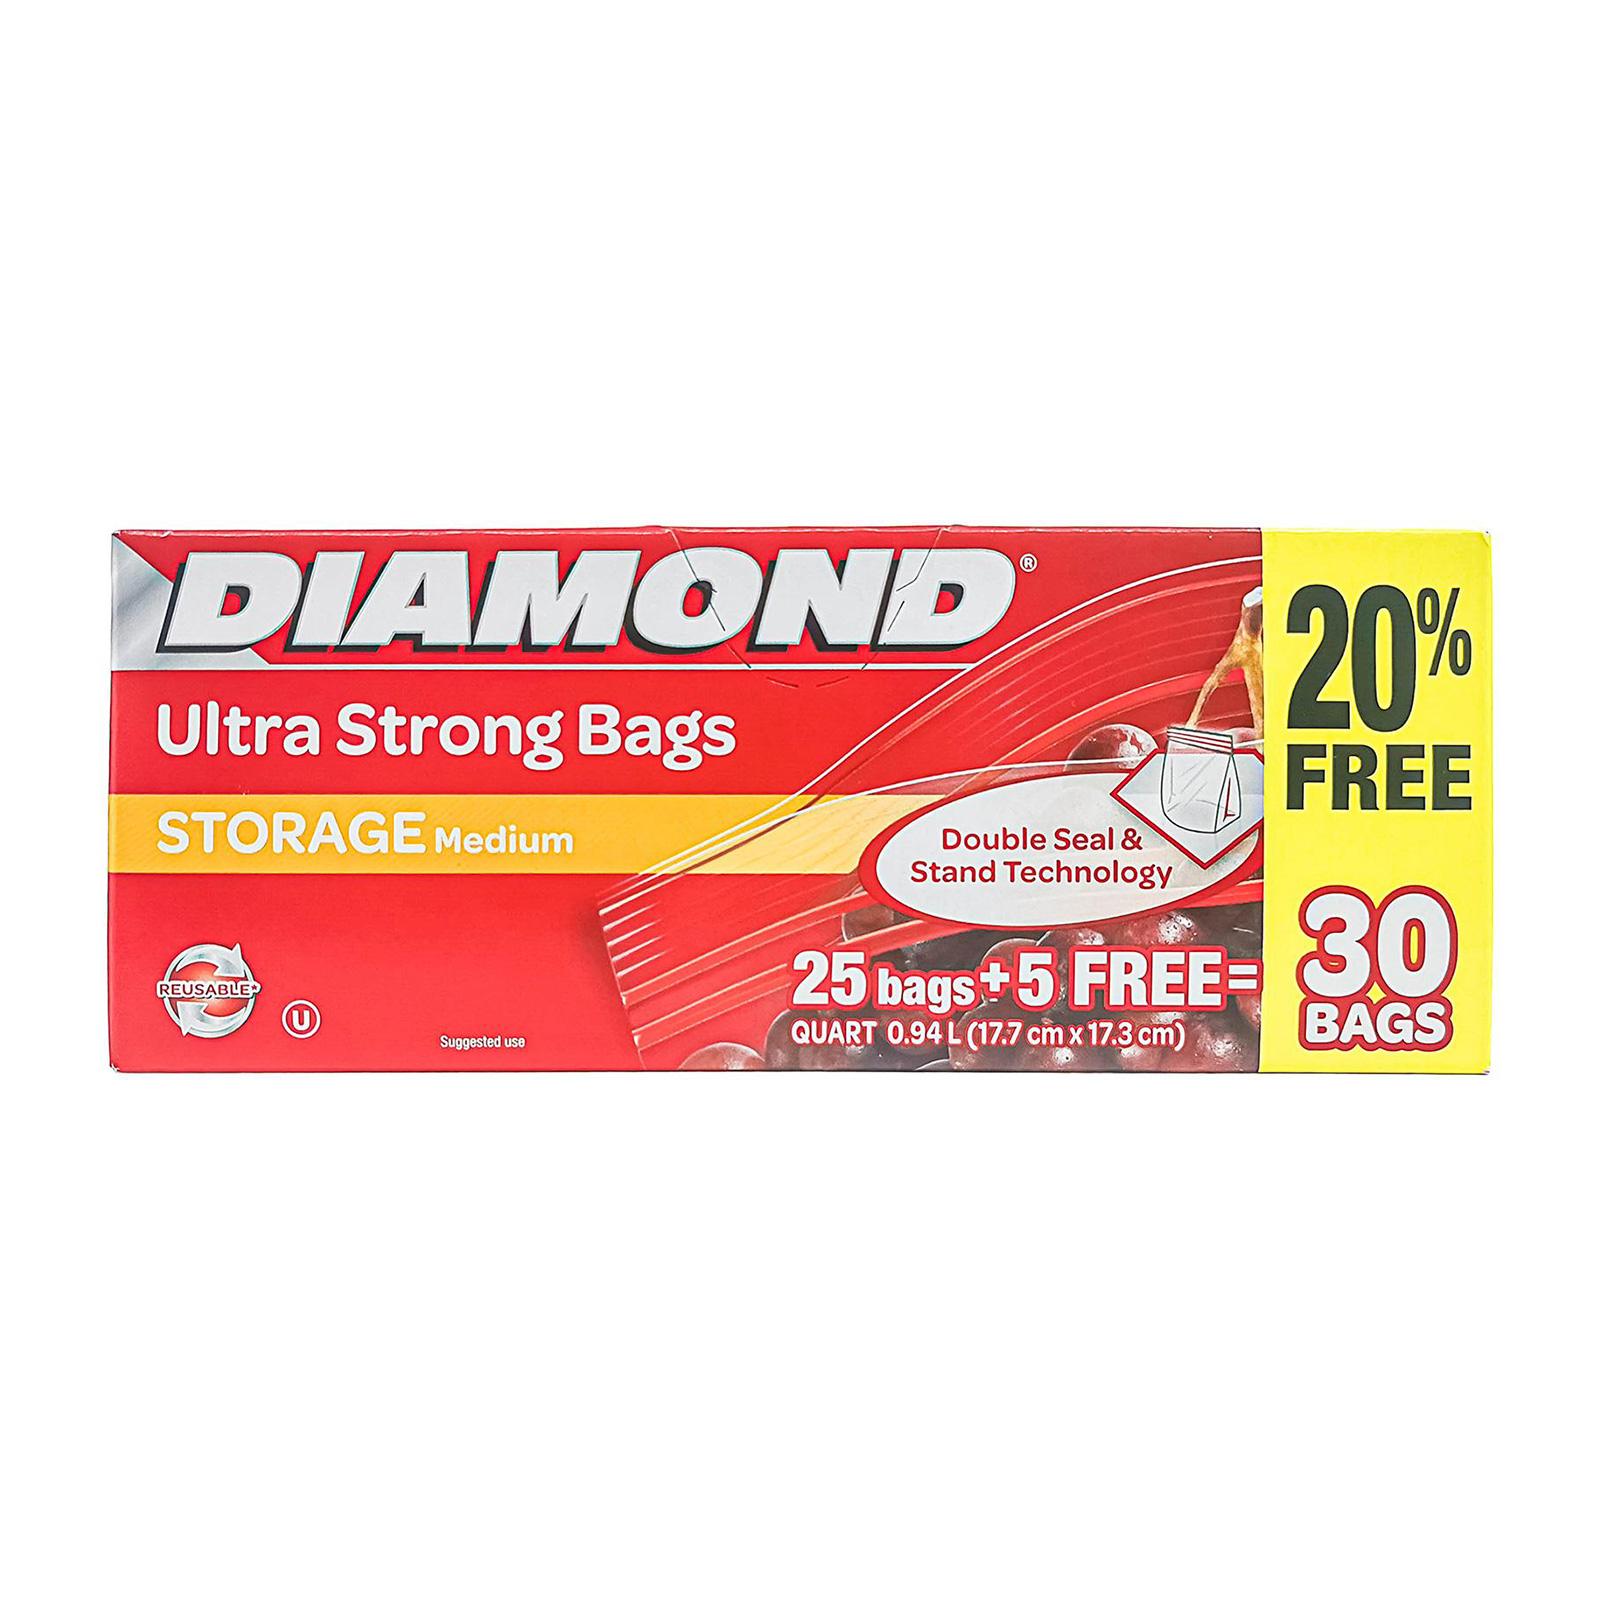 Diamond Ultra Strong Garbage Bags 8s Jumbo (100L, 76cm x 581cm)